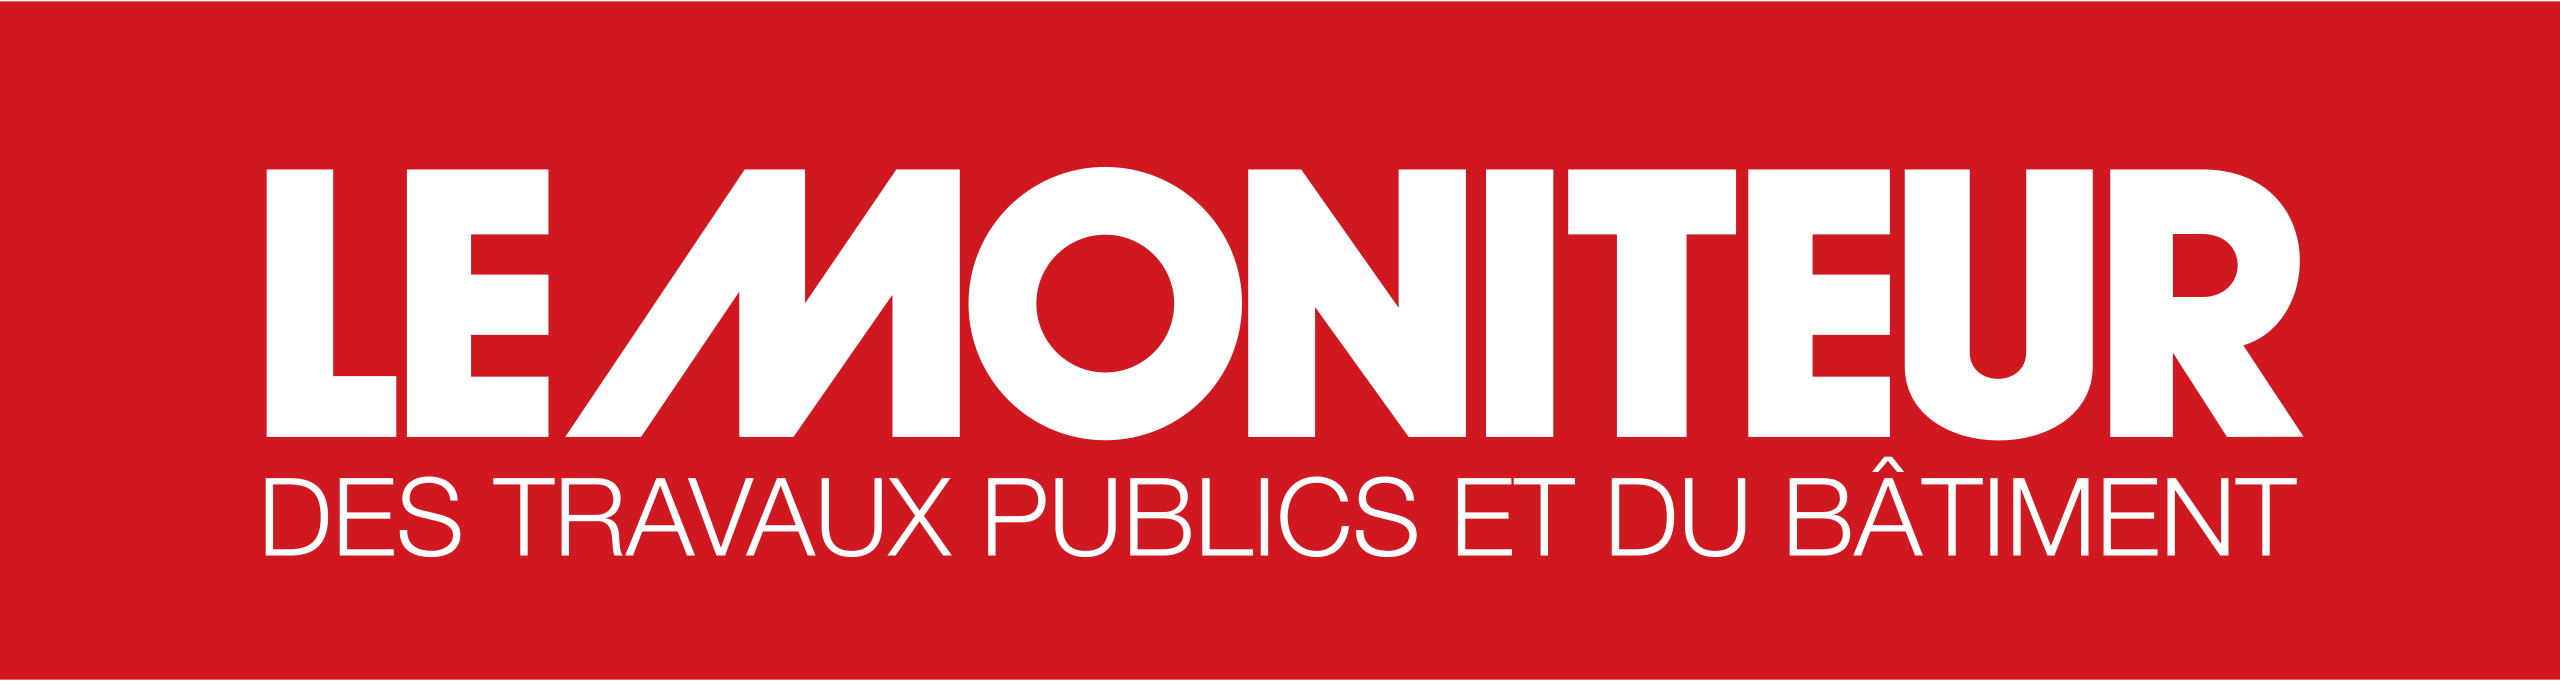 File:Le Moniteur logo rouge.svg - Wikipedia